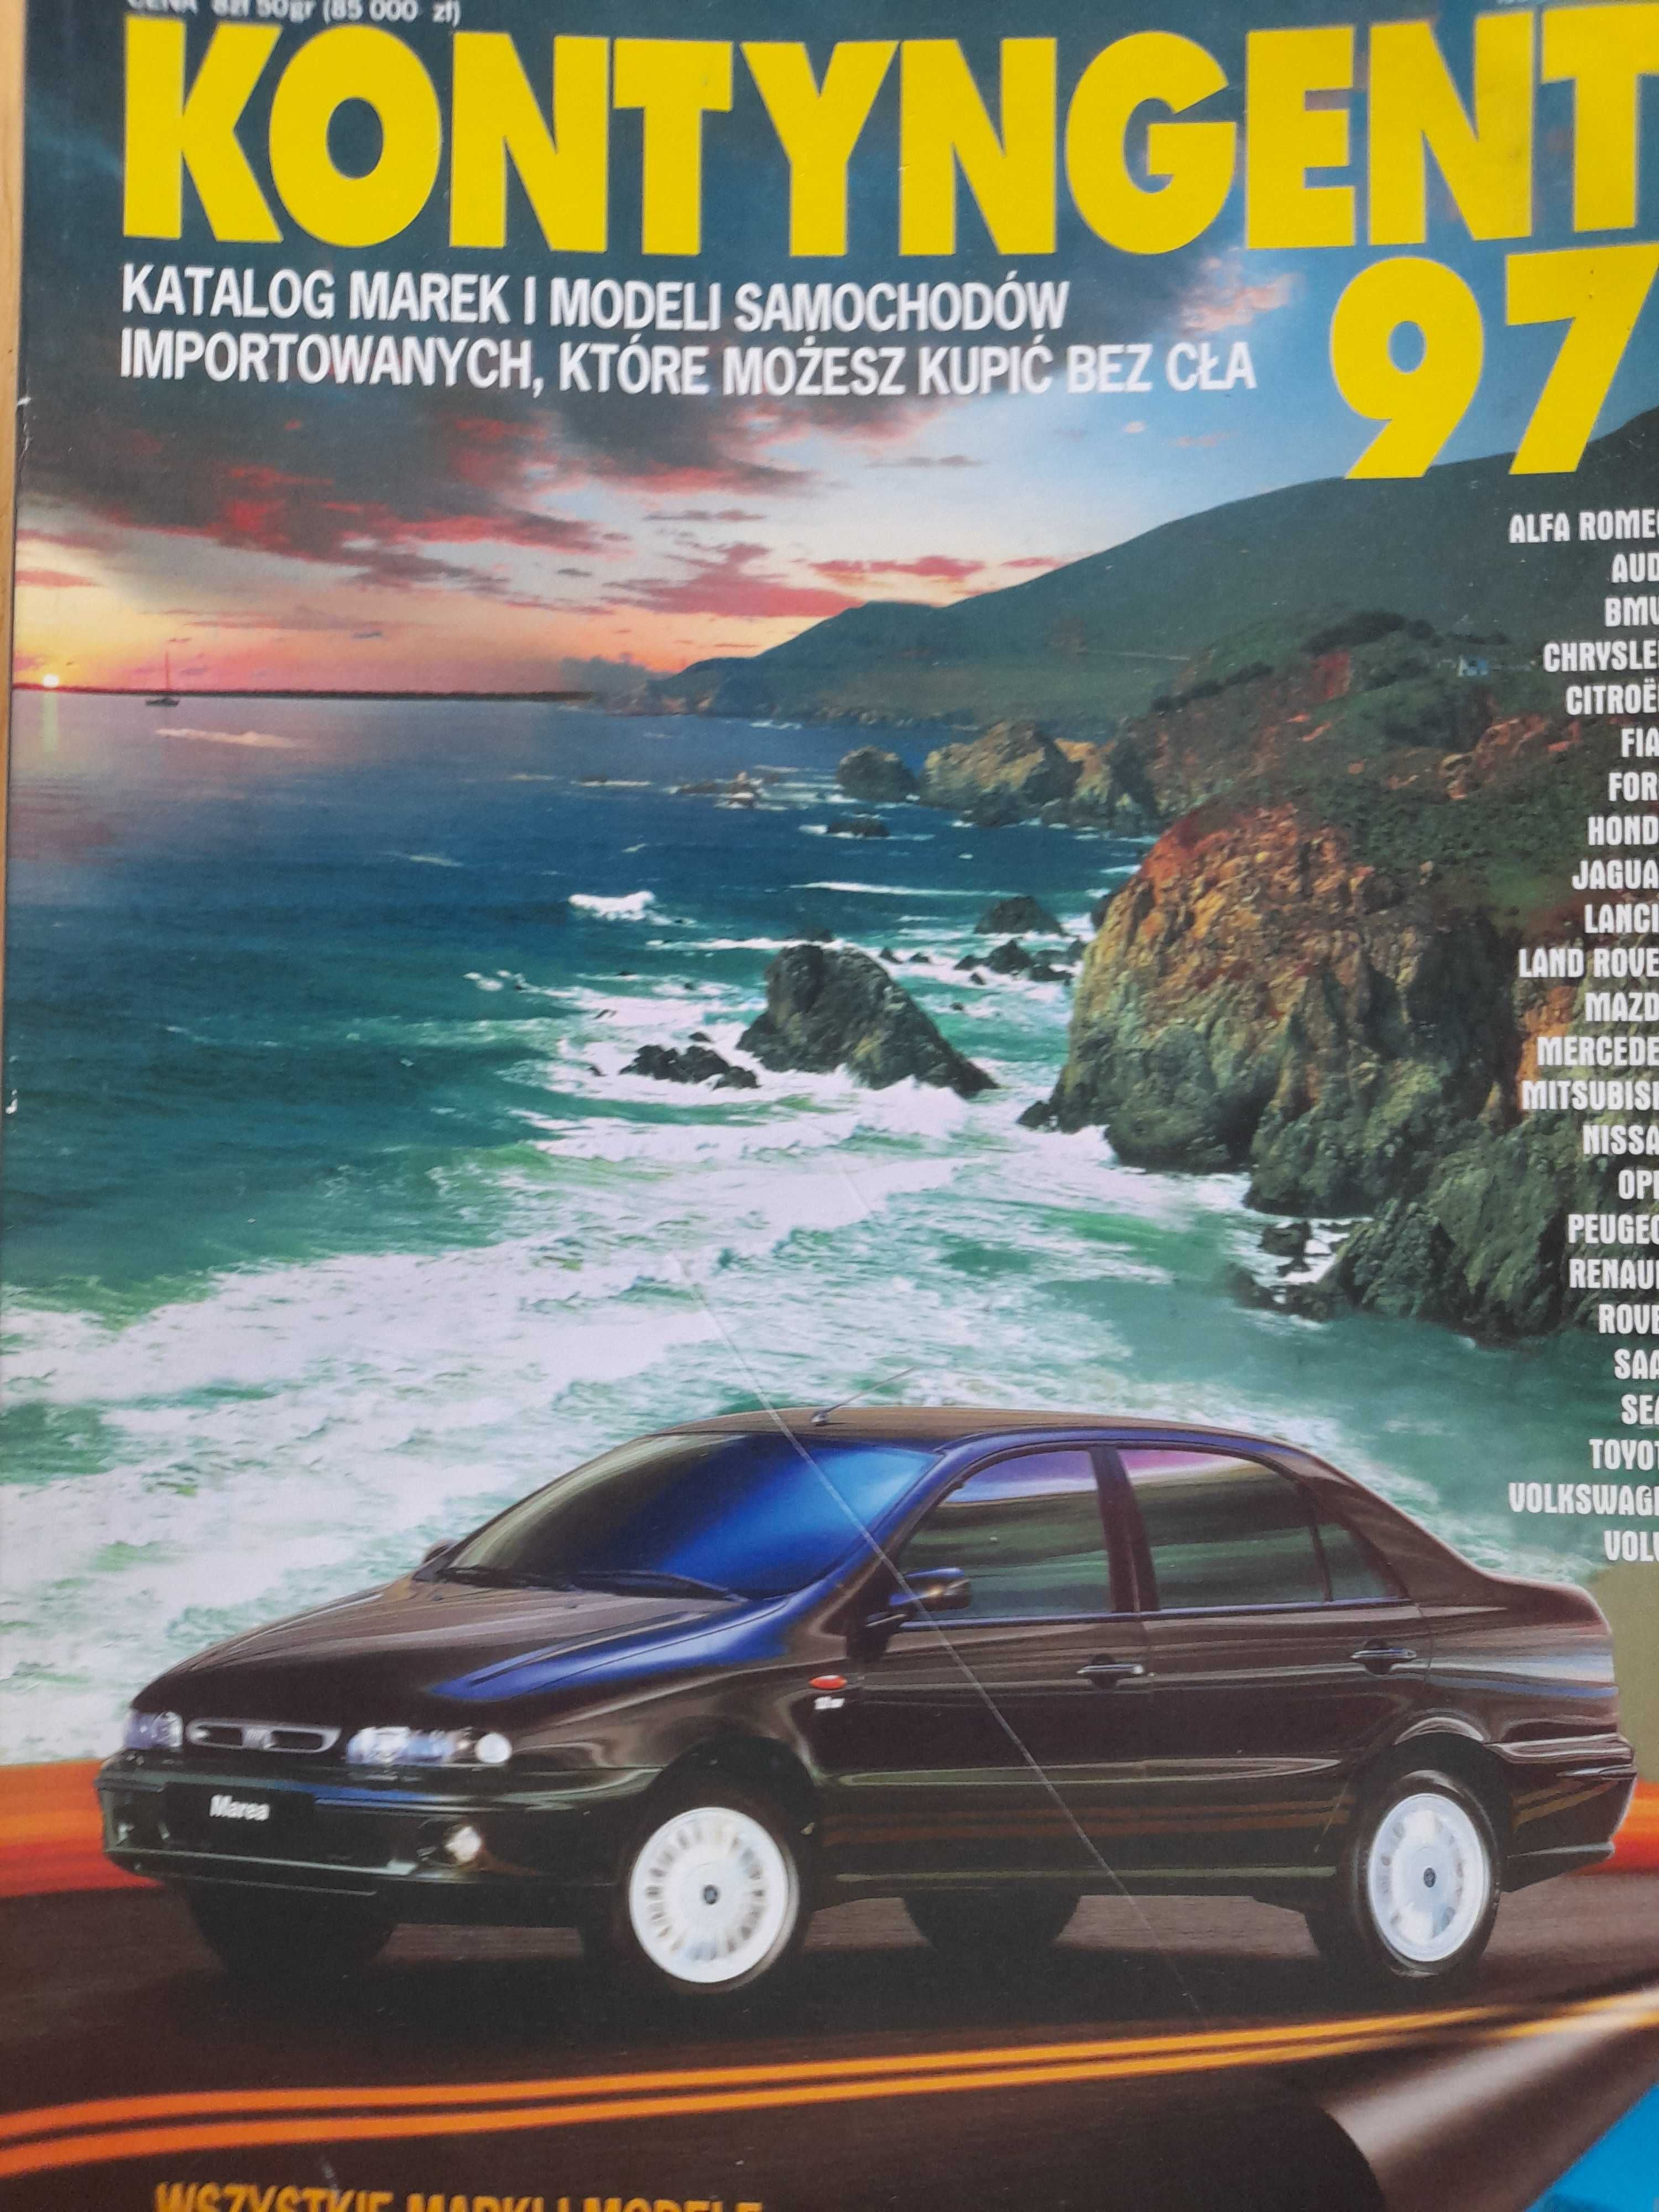 Katalog Kontyngent 97 Alfa, BMW, Fiat, Lancia, Land Rover, rok 1997